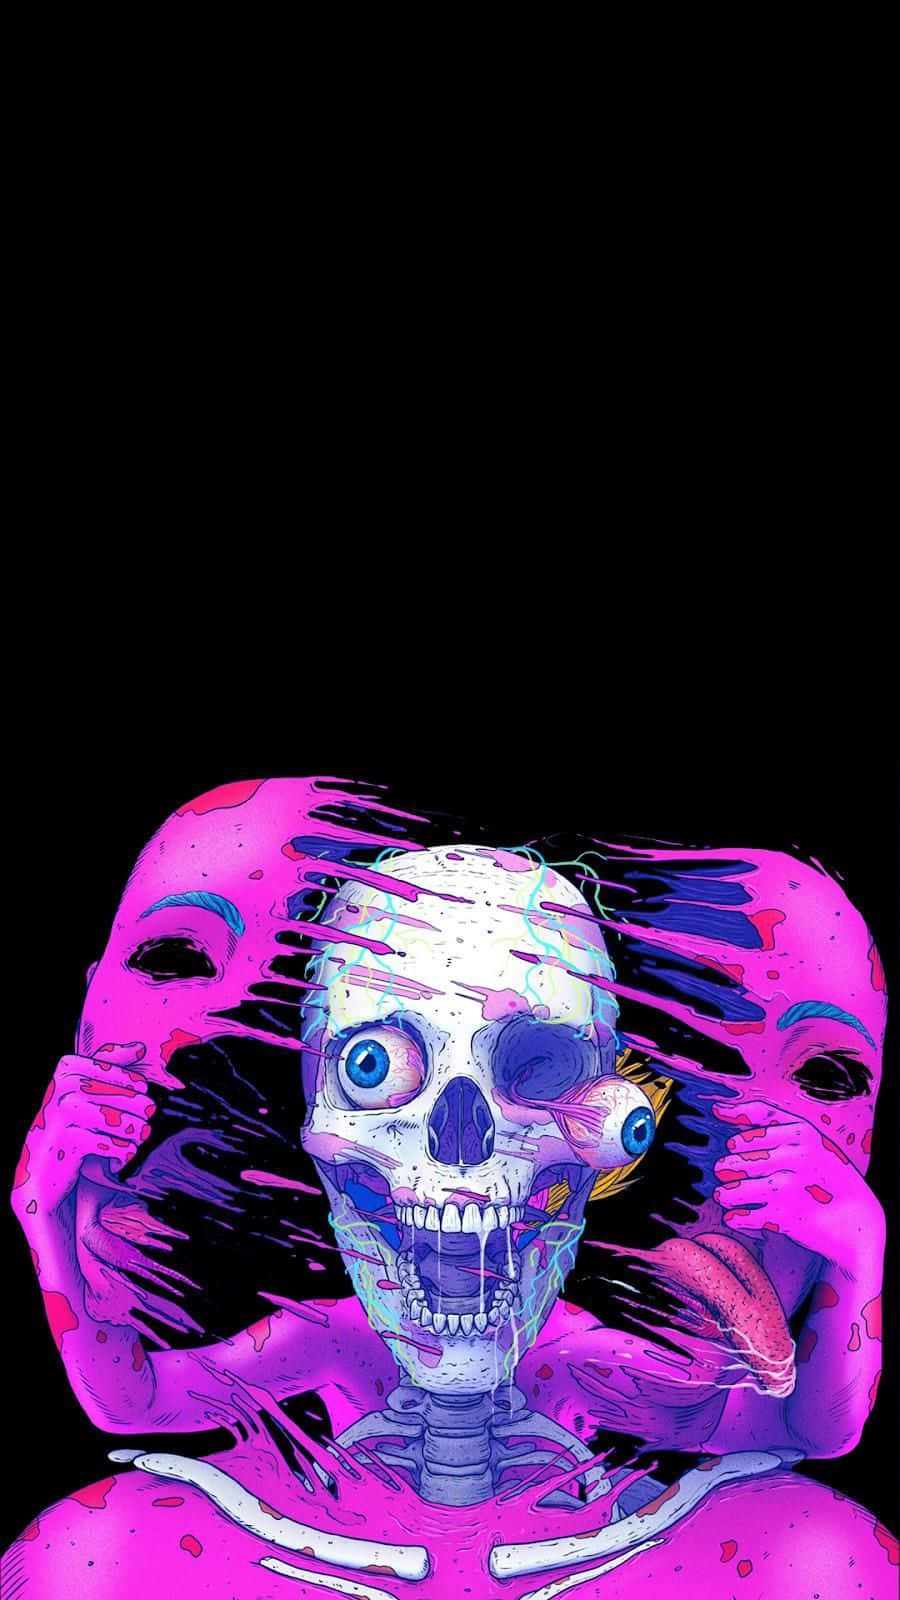 Psychedelic Grunge Aesthetic Art Wallpaper